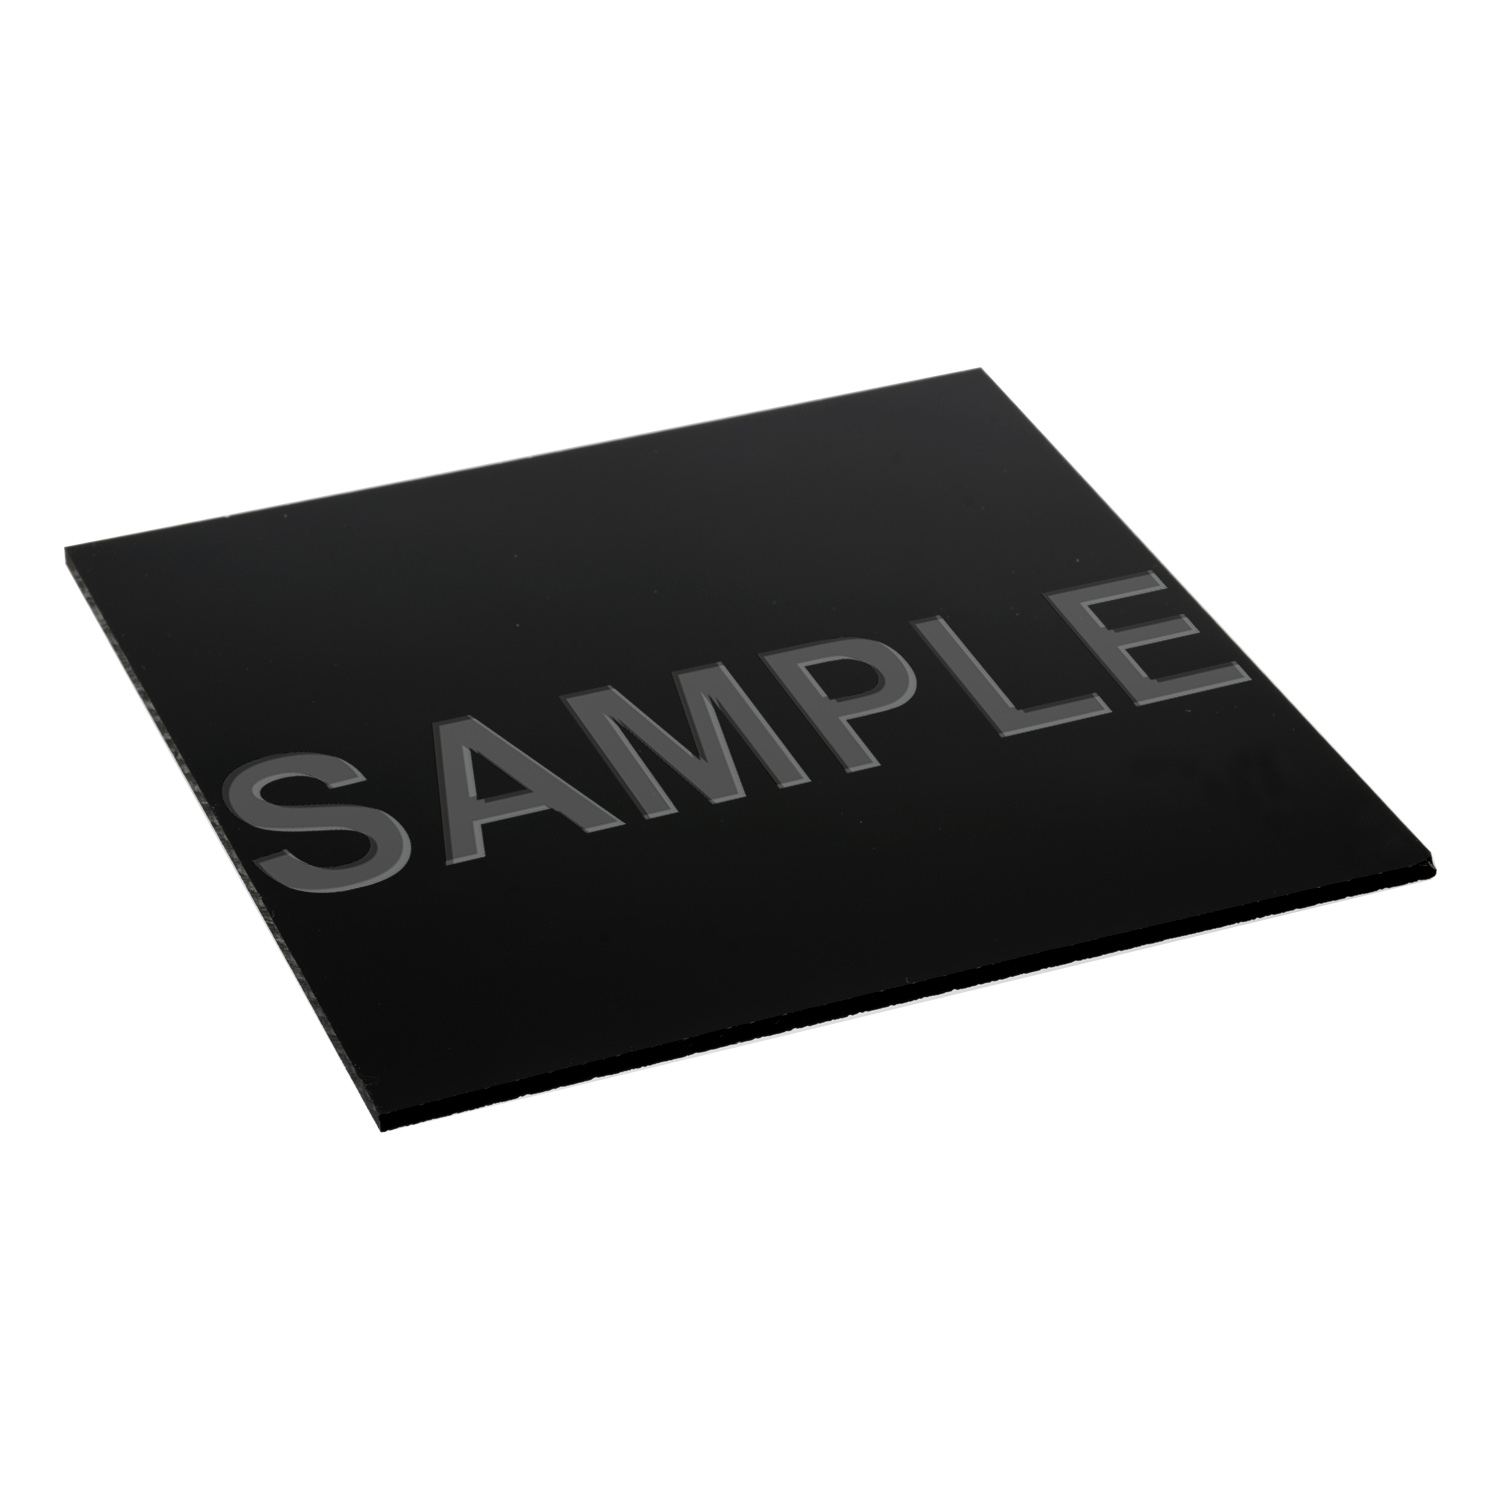 Sample Color Acrylic Sheet - Cast